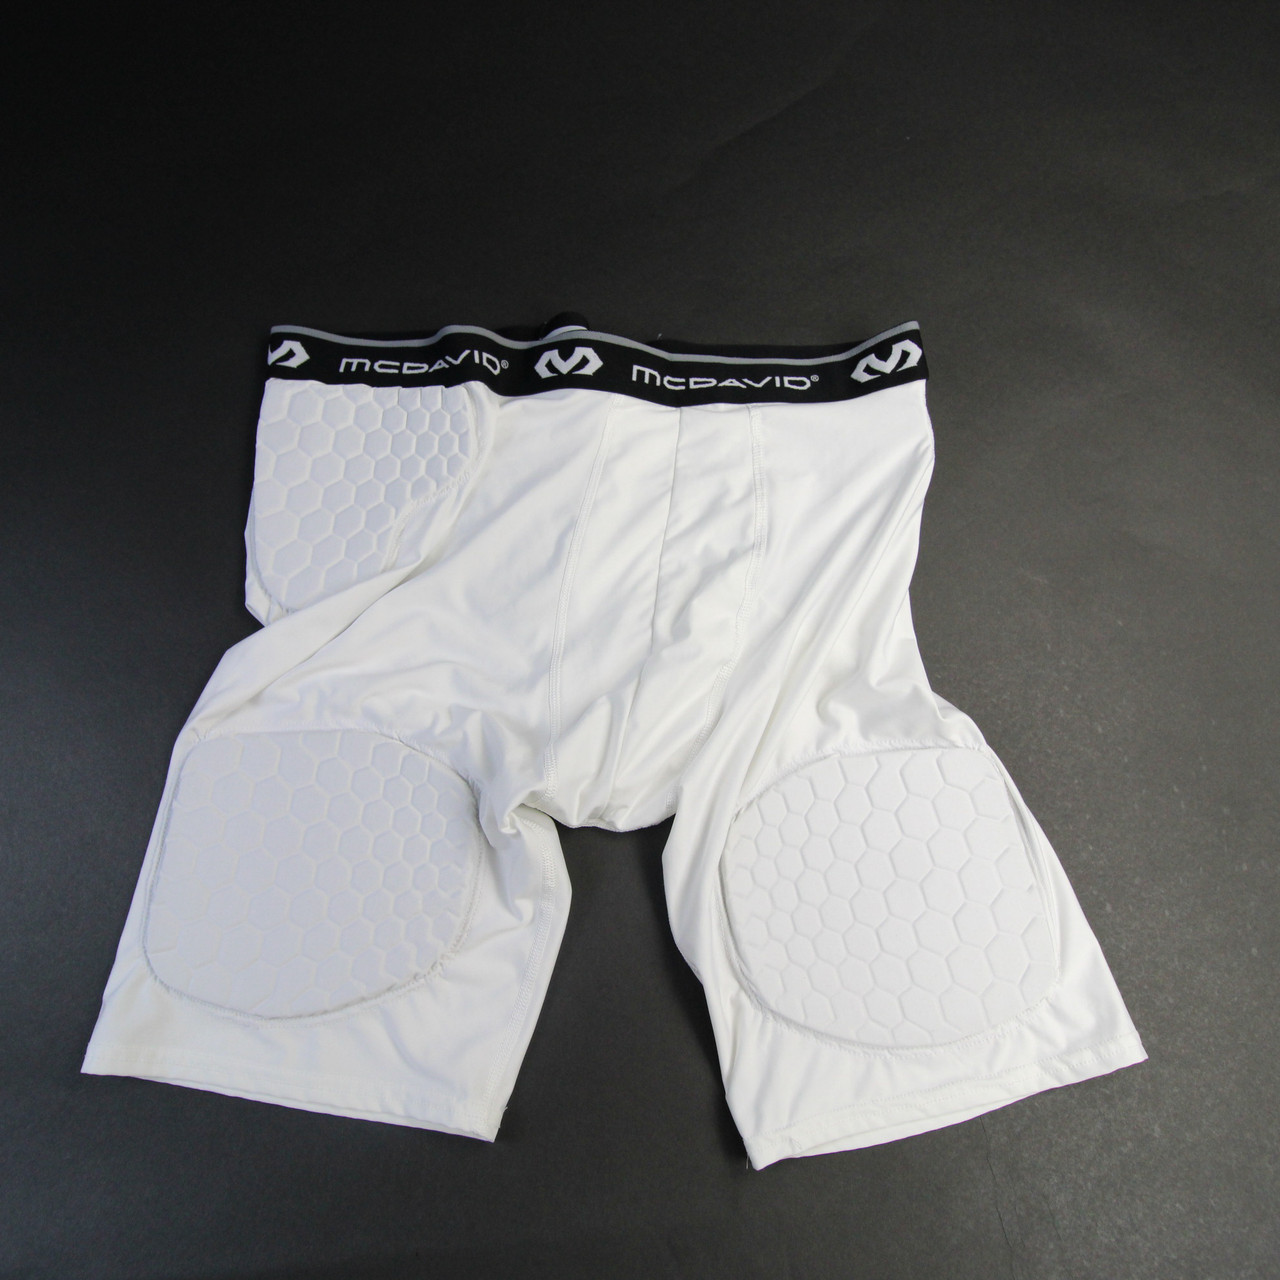 McDavid Padded Compression Shorts Men's White Used 3XL